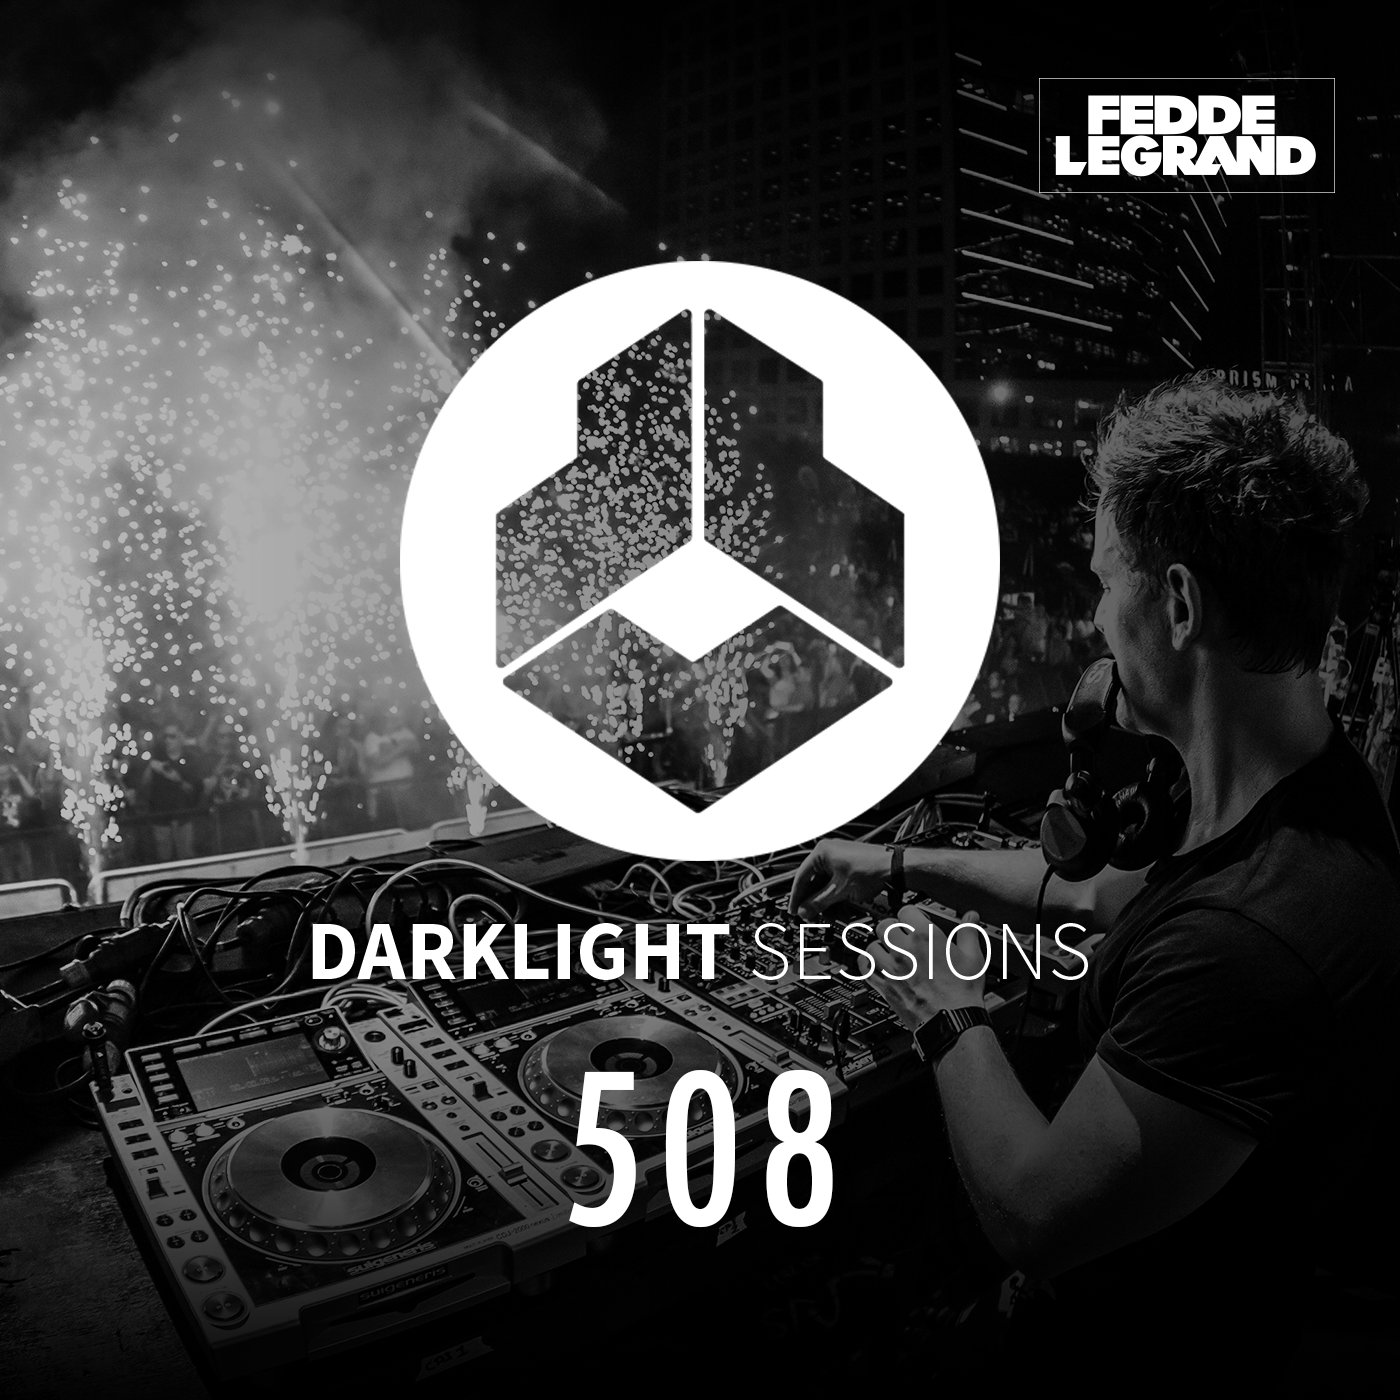 Darklight Sessions 508